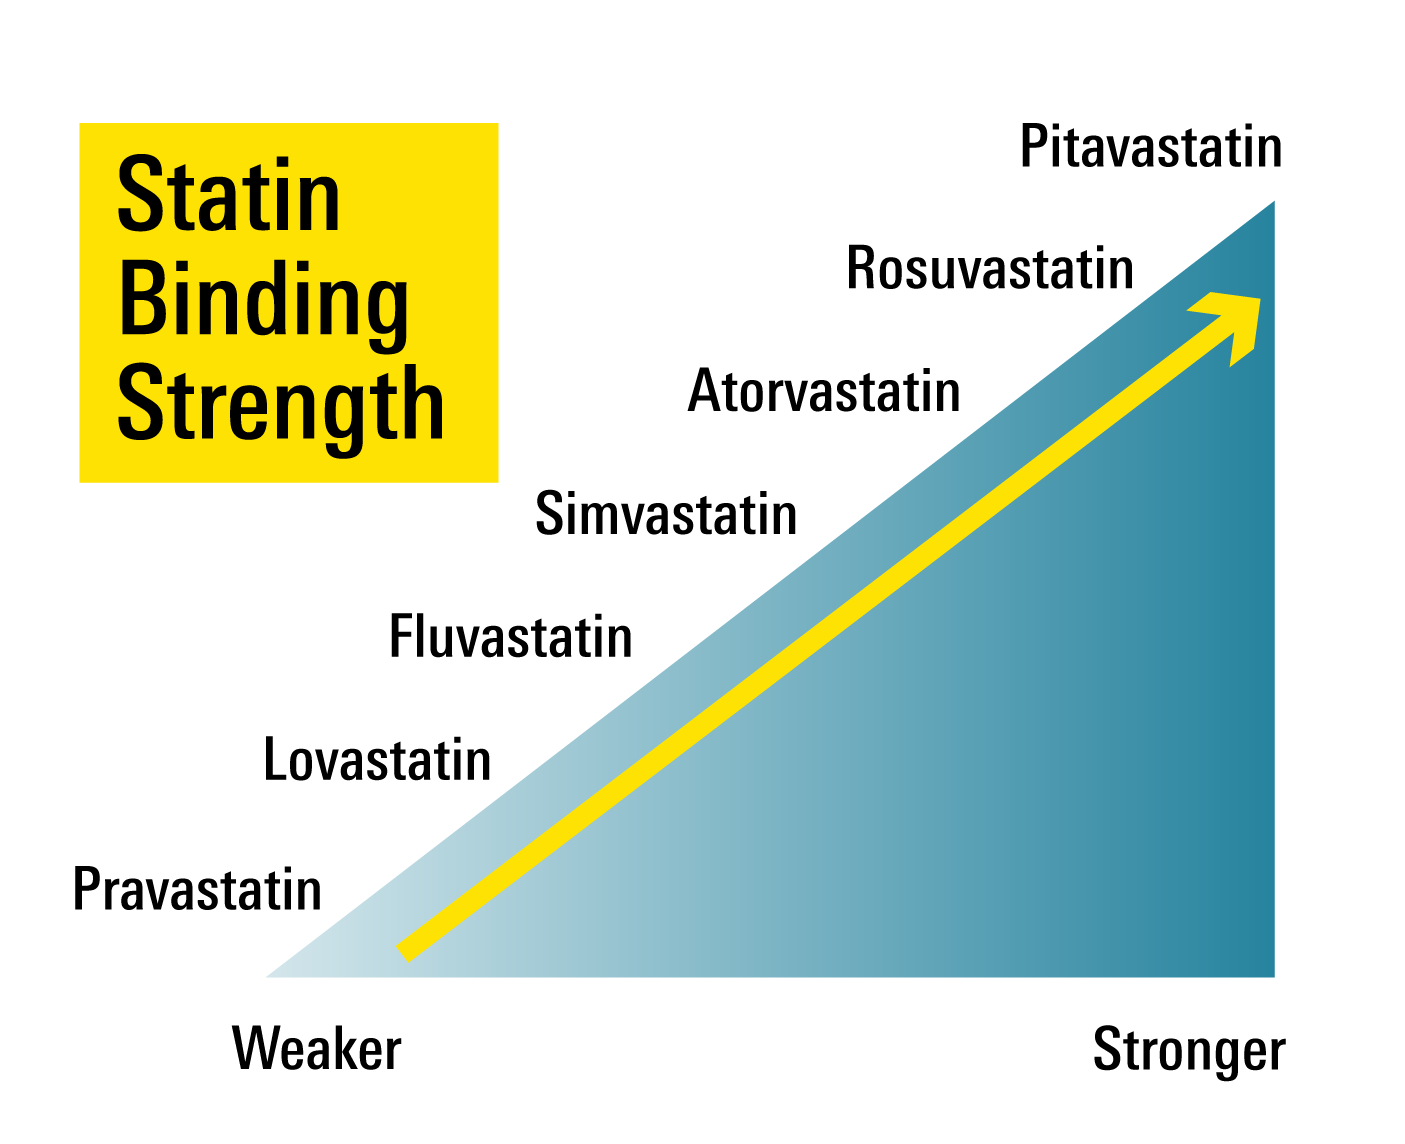 Statin binding strength